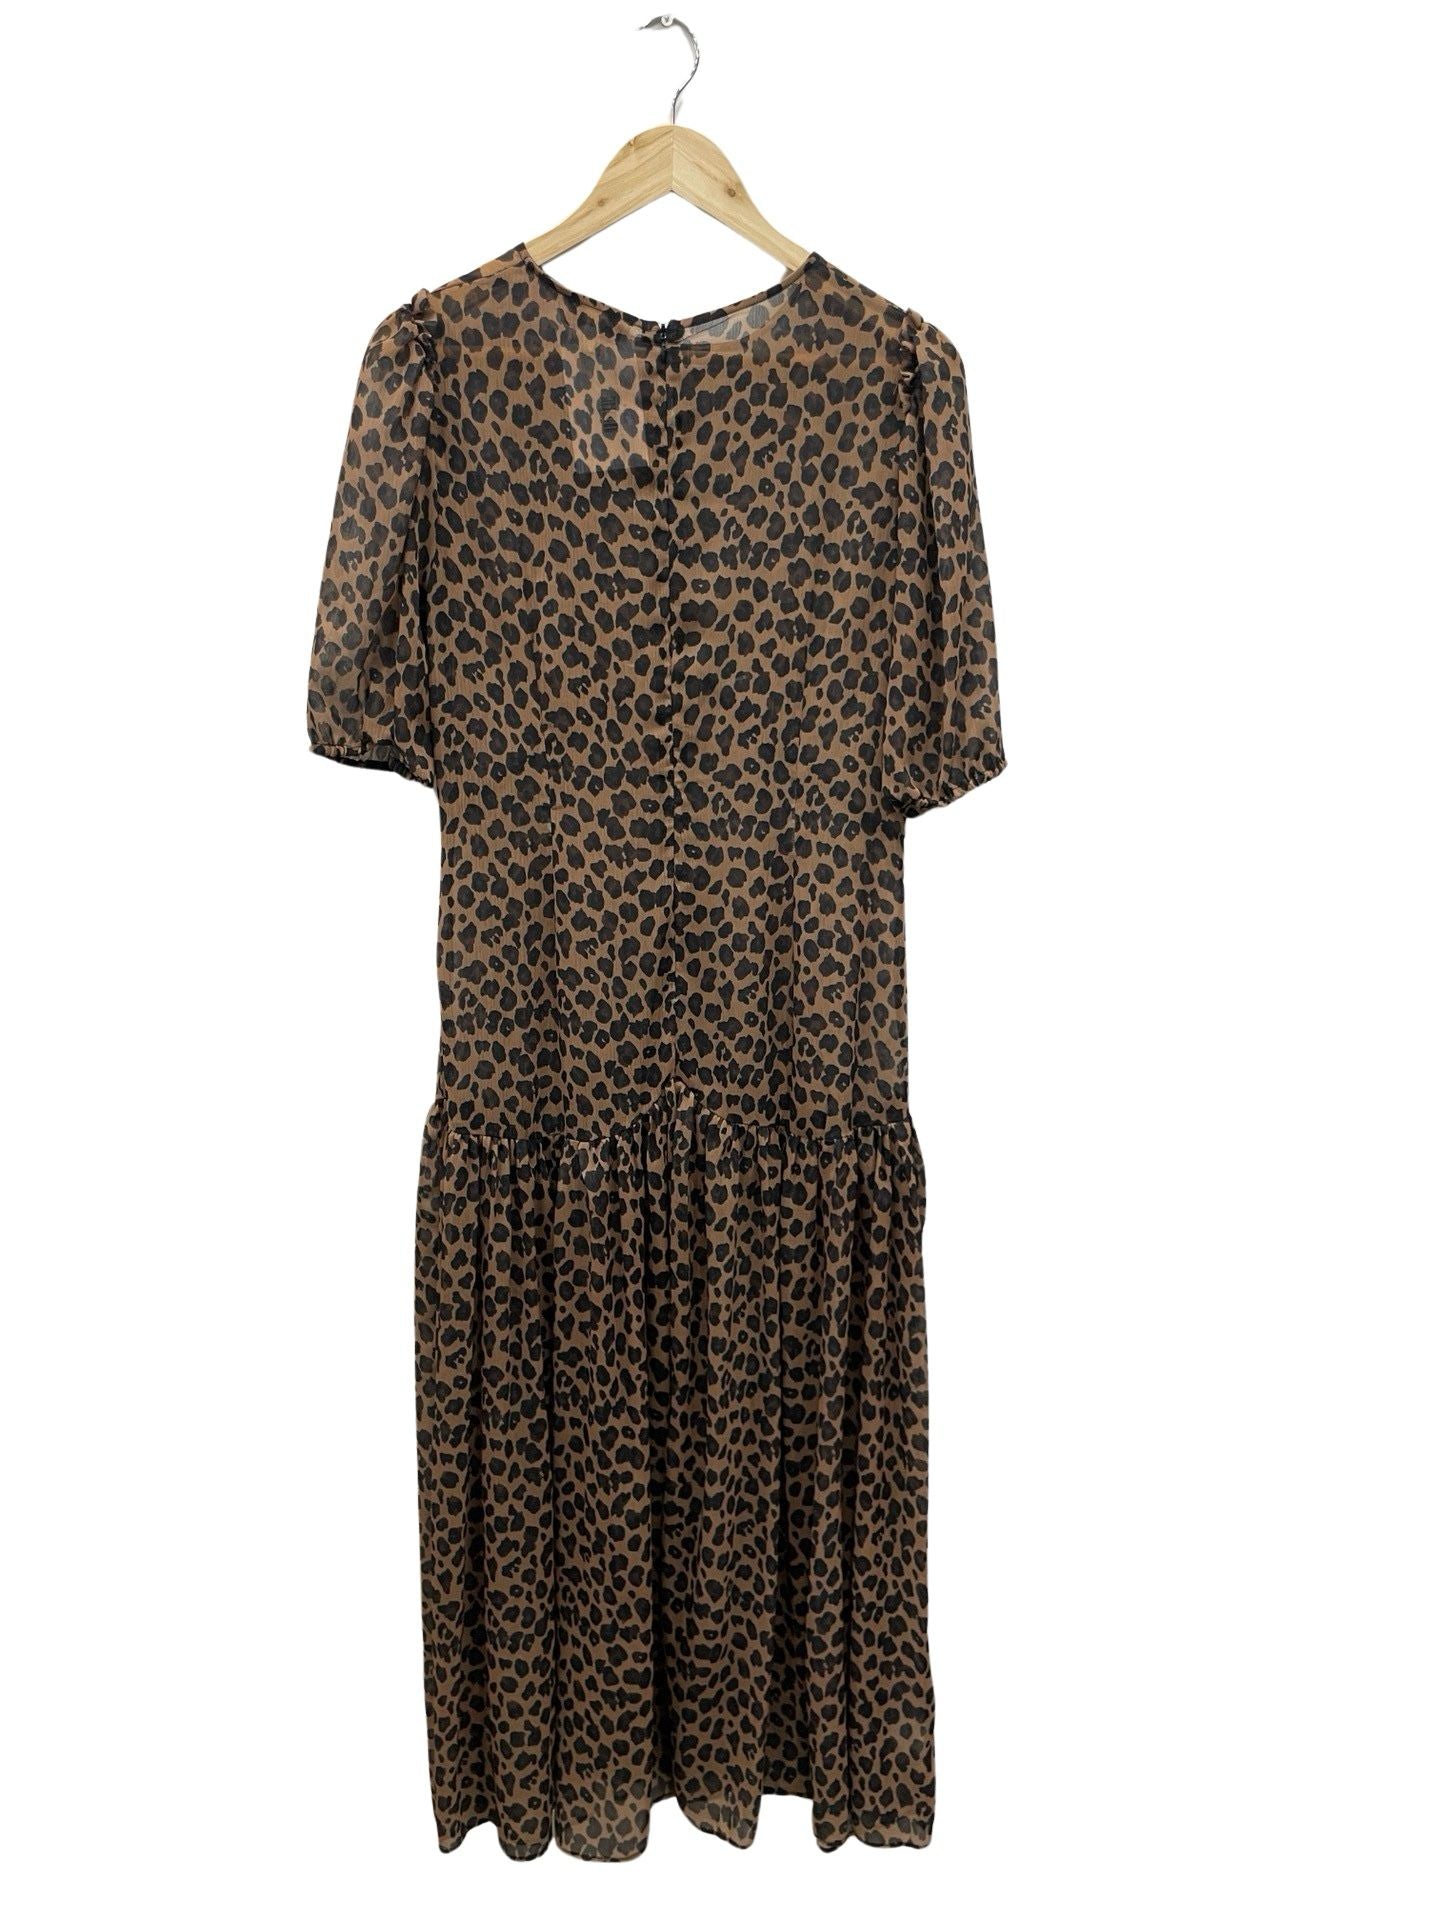 Never Fully Dressed Leopard Print Dress 14